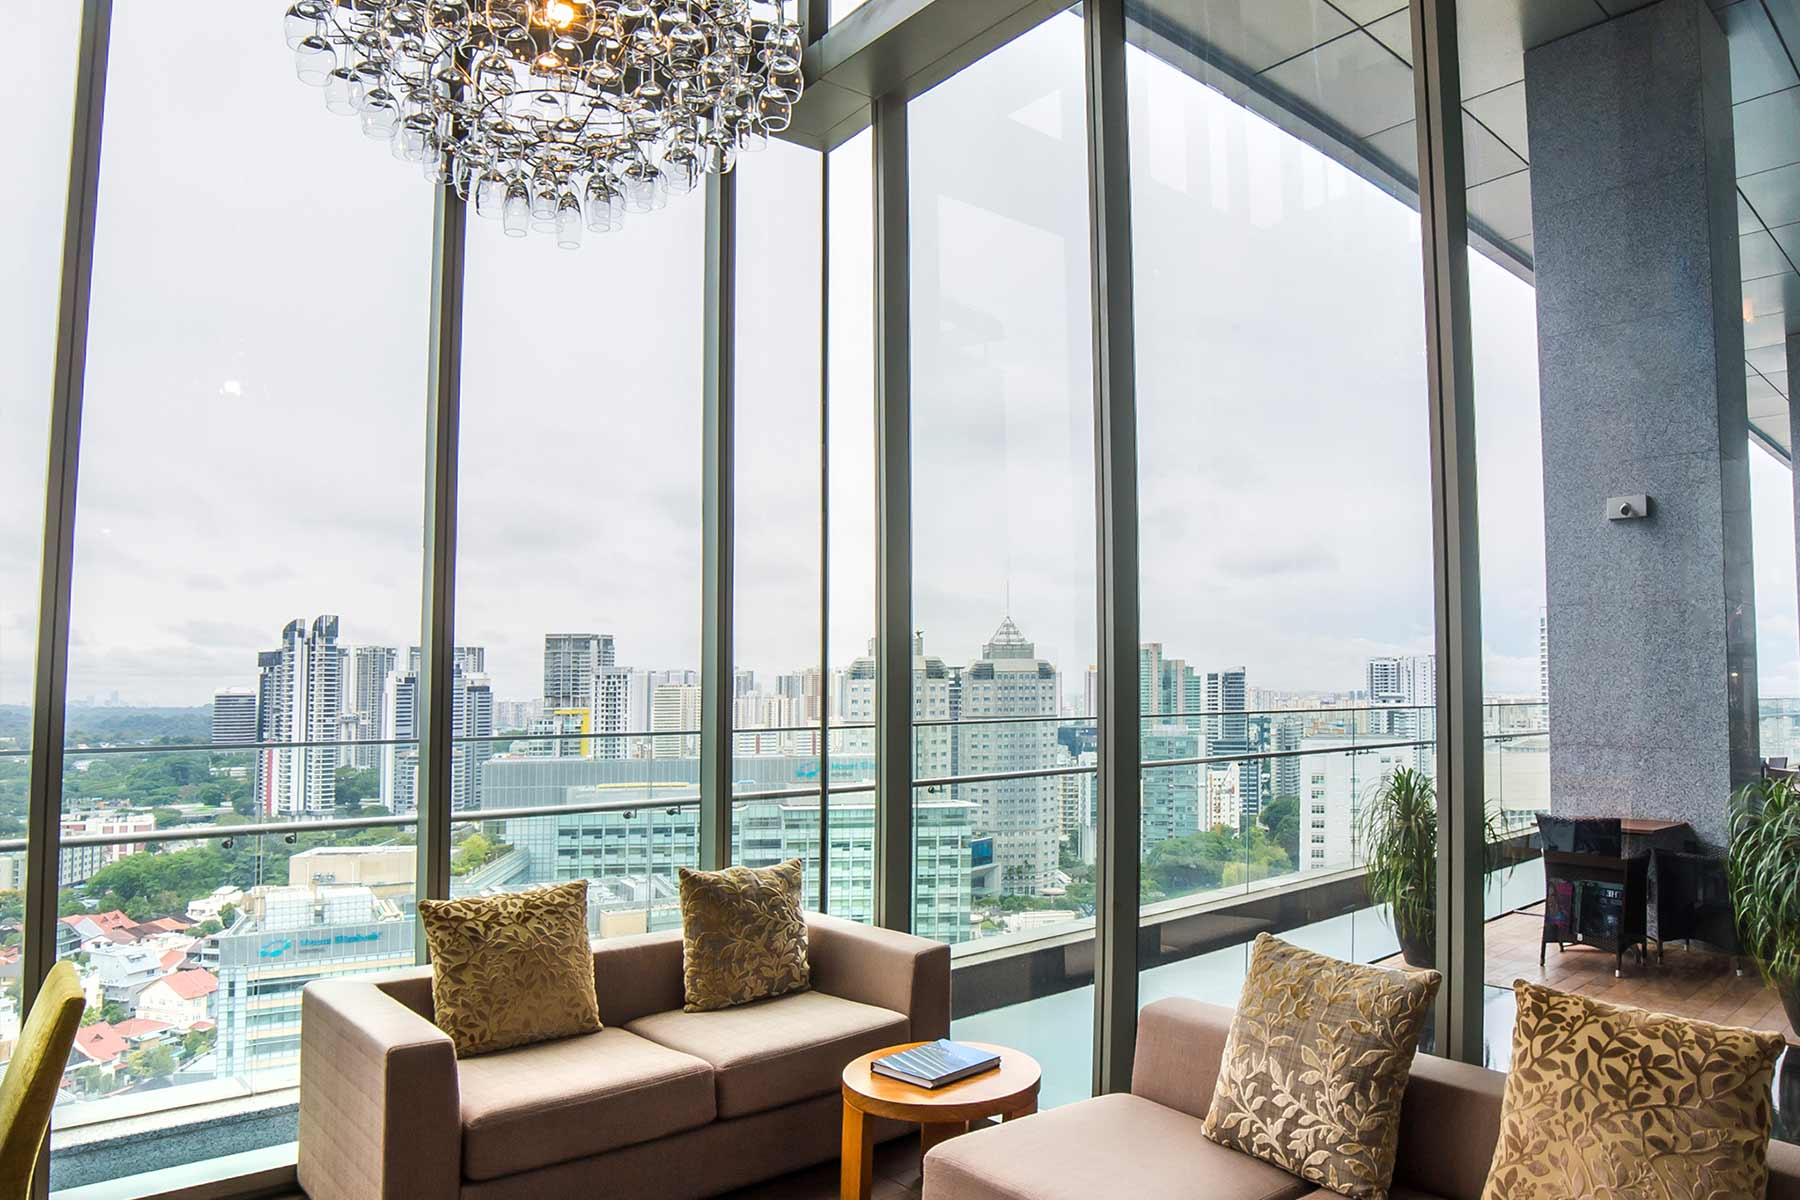 Oasia Hotel Novena Singapore - Club lounge, the living room